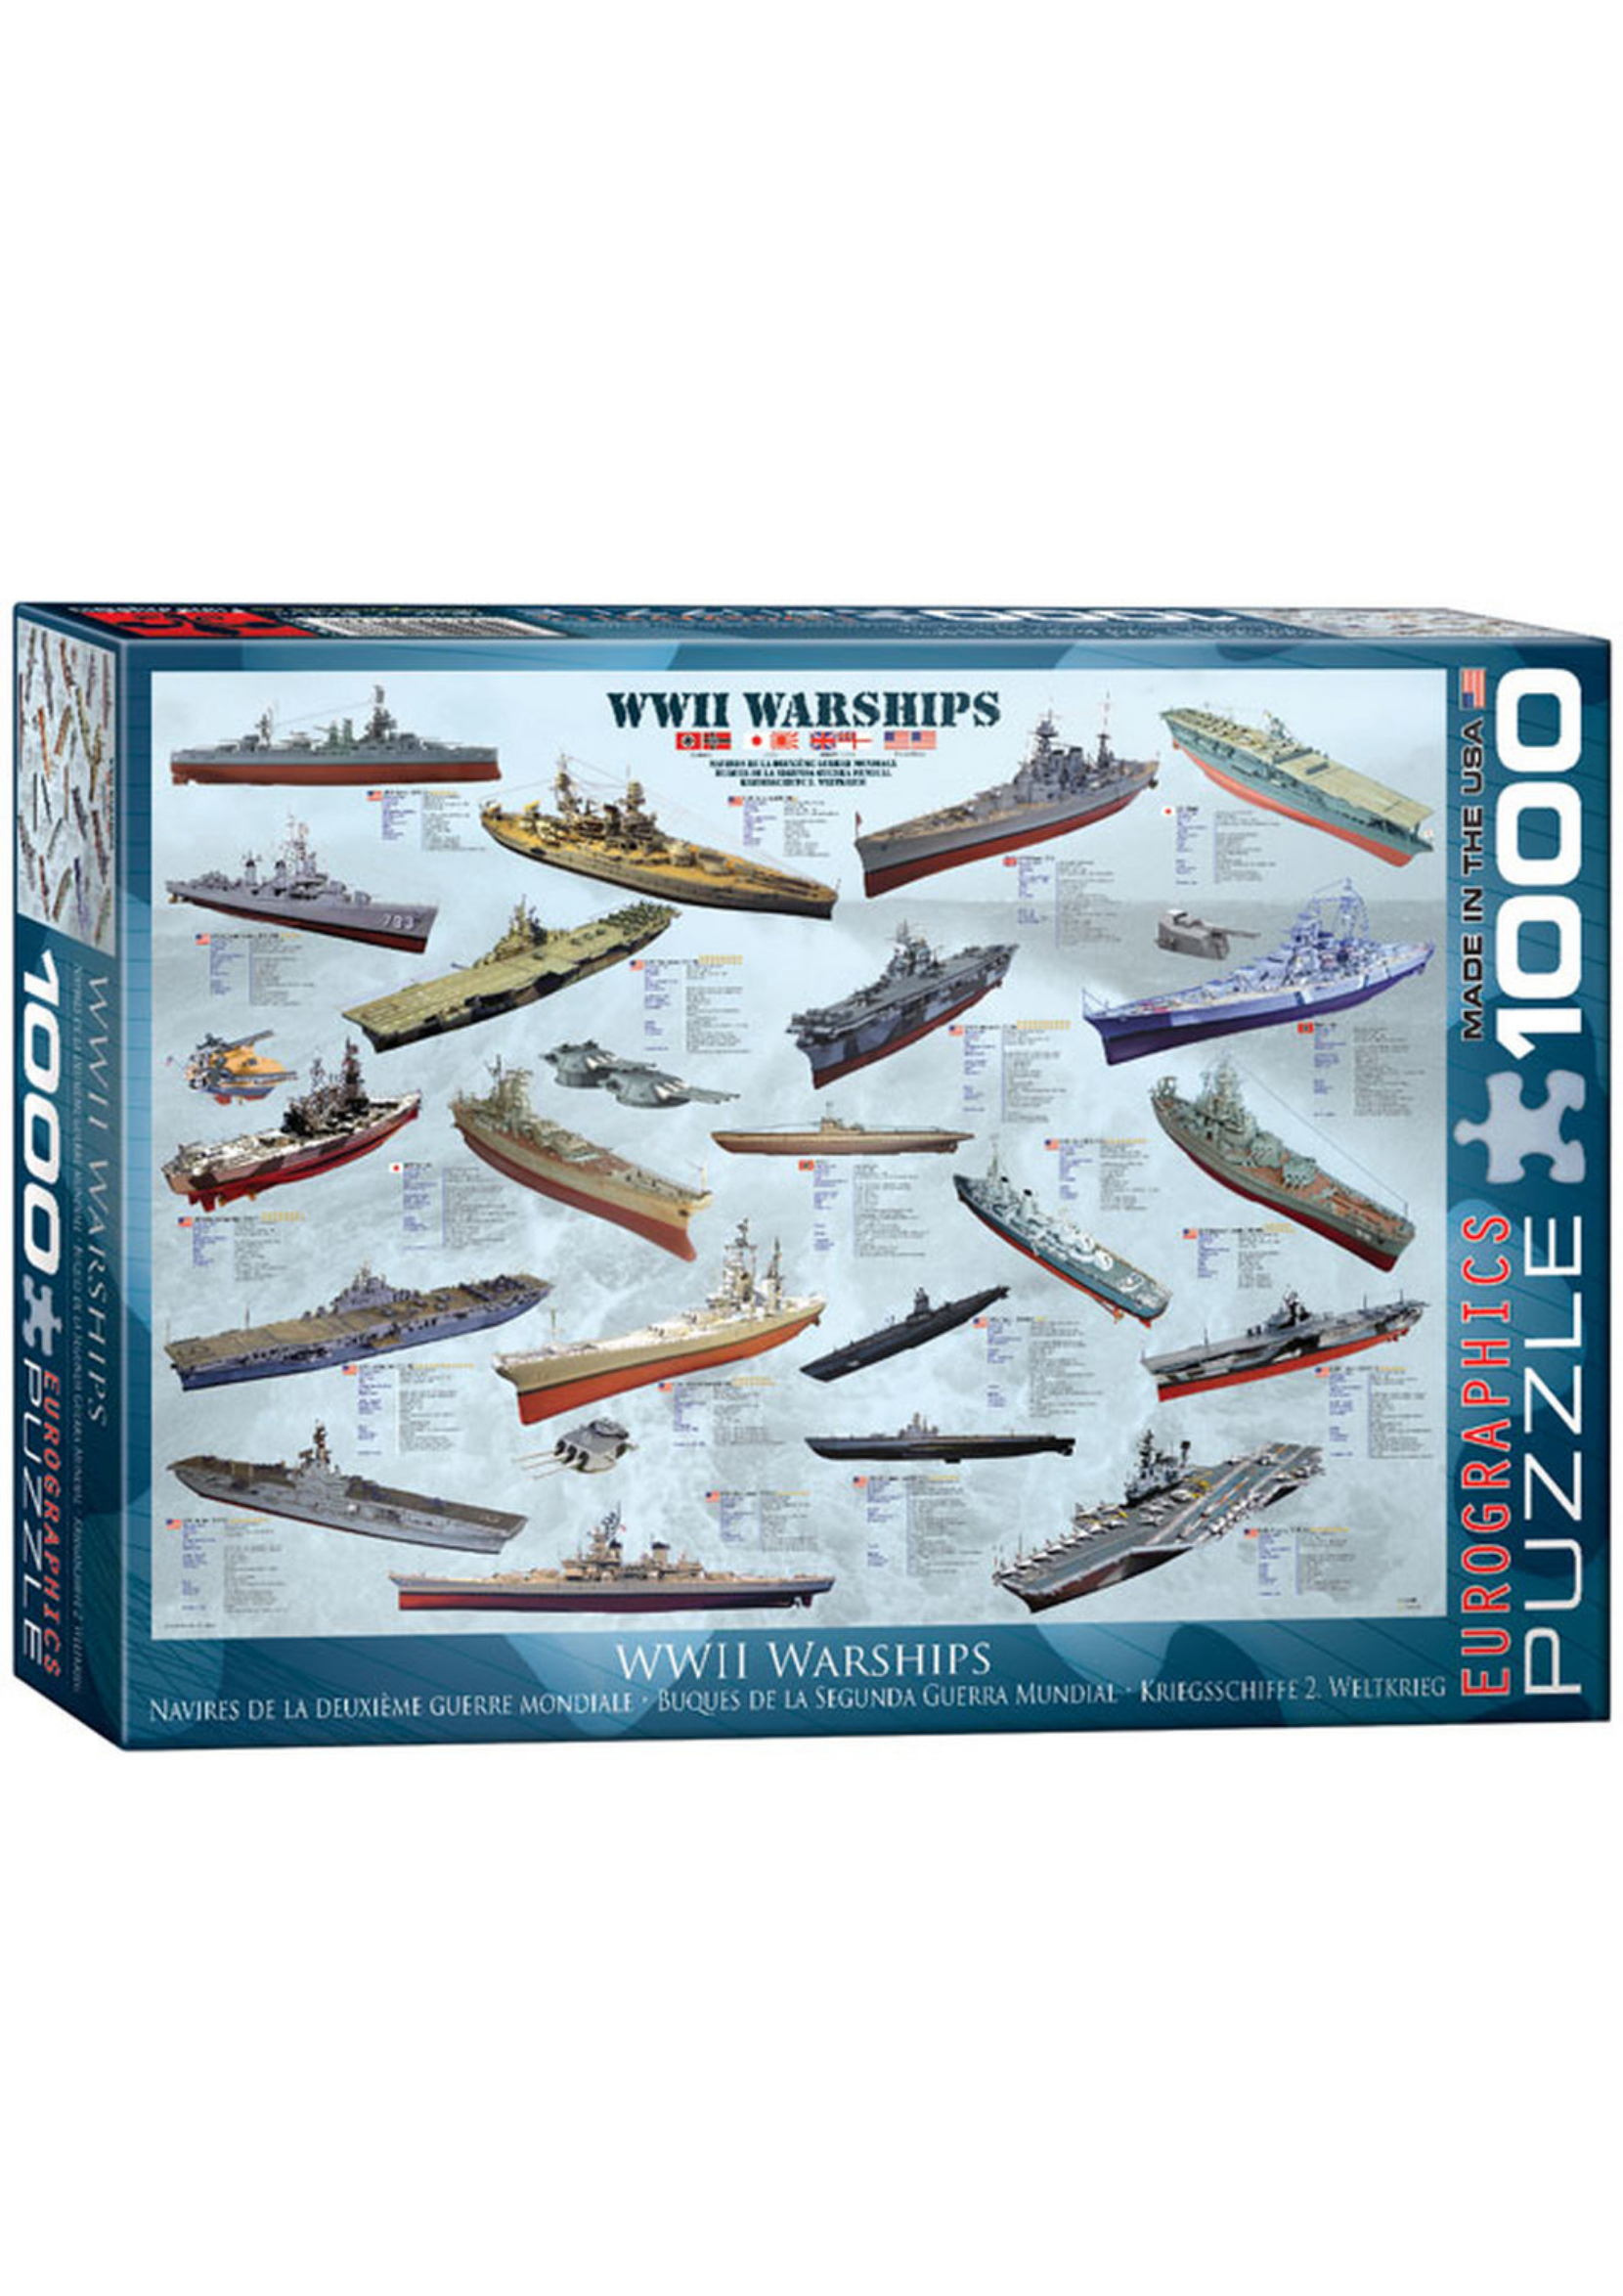 New Sealed Educa Marine Dreams Ship Shaped 1,000 Piece Jigsaw Puzzle 31 x  20.5